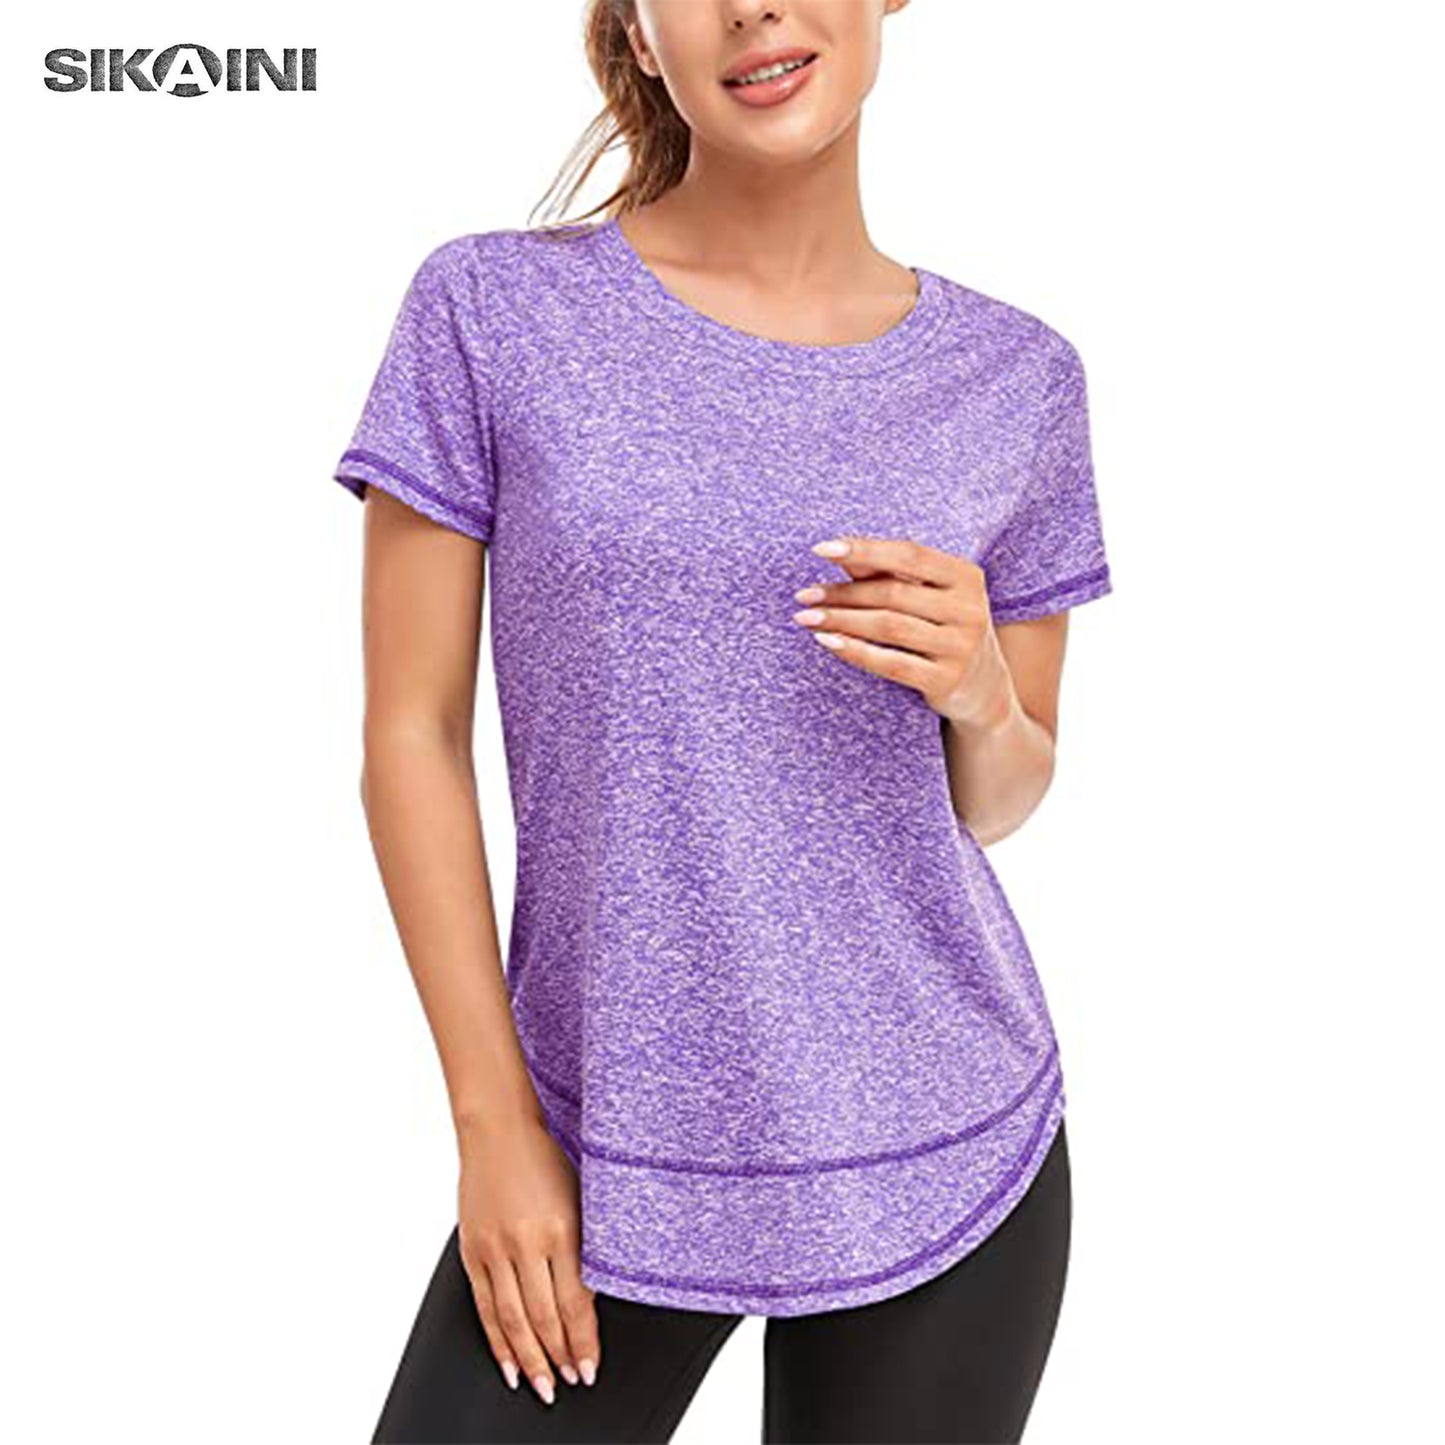 SIKAINI Women's Short Sleeve Workout Shirts